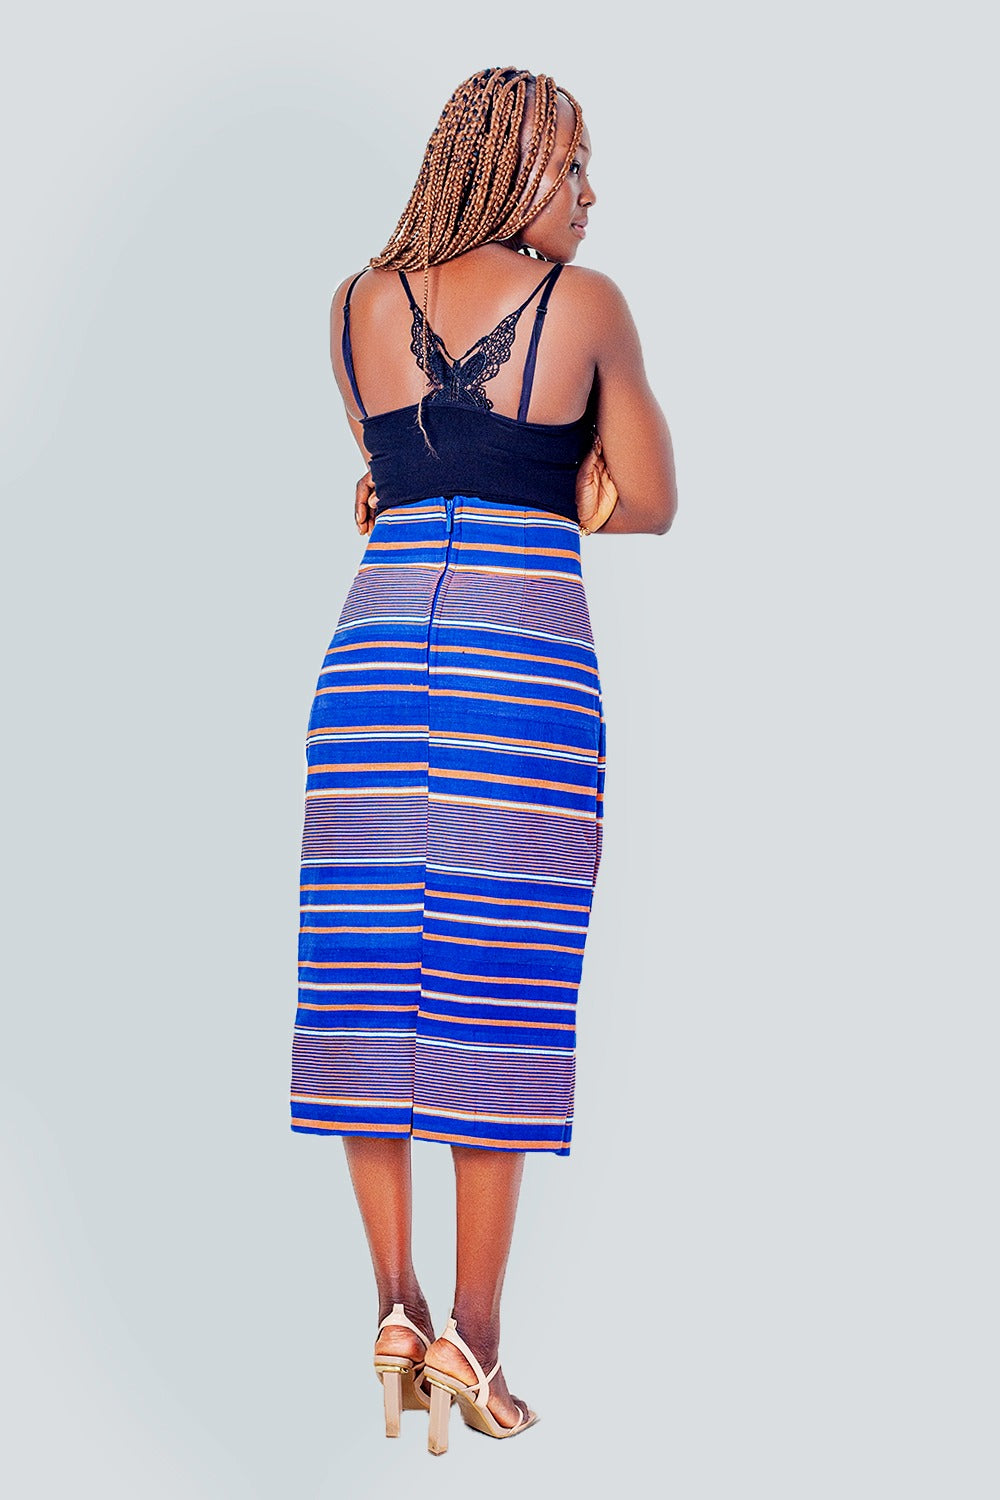 Chloe African Prints Midi Skirt